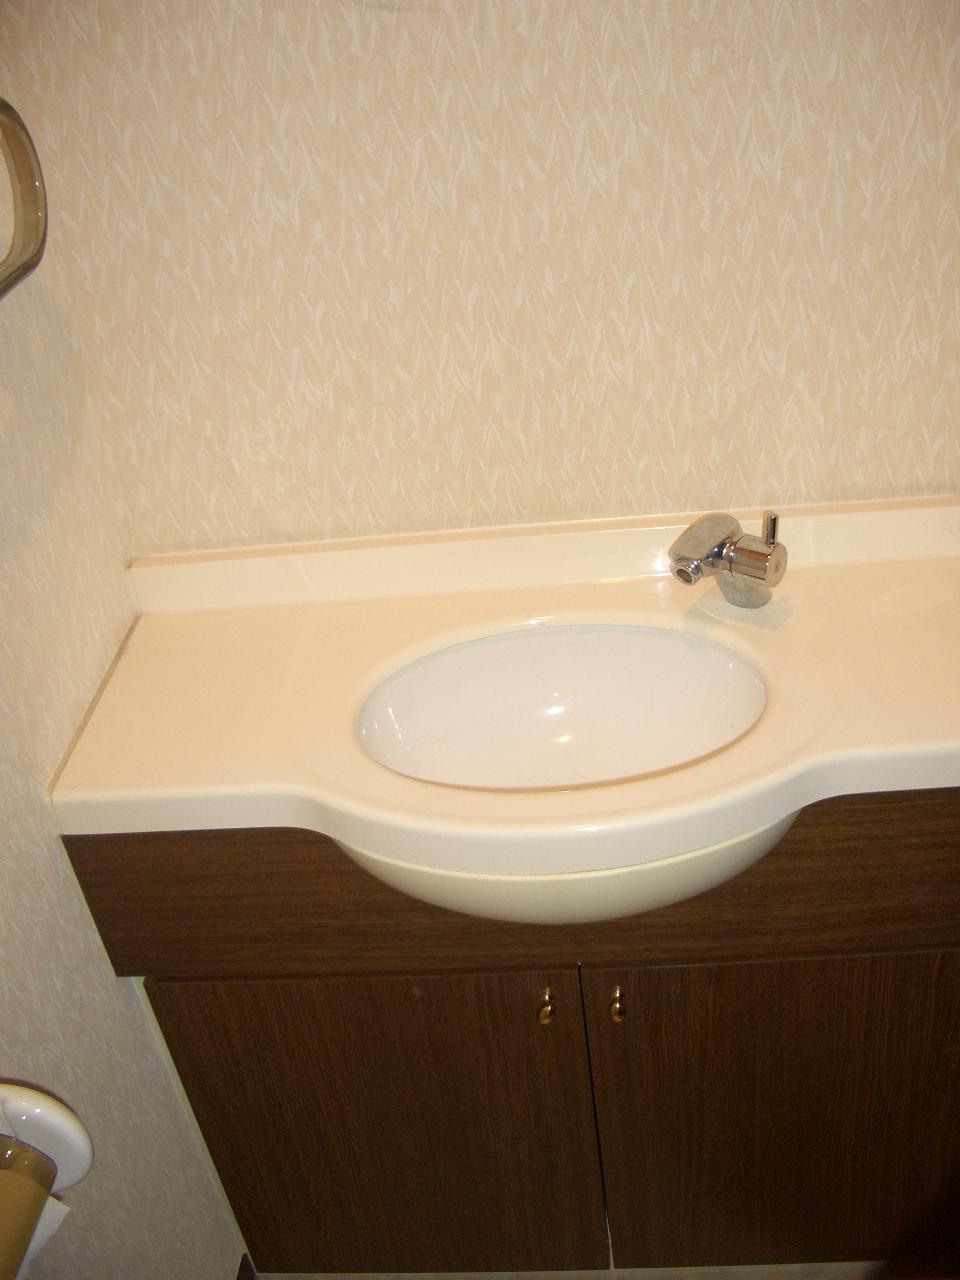 Toilet. Toilet hand washing (12 May 2013) Shooting